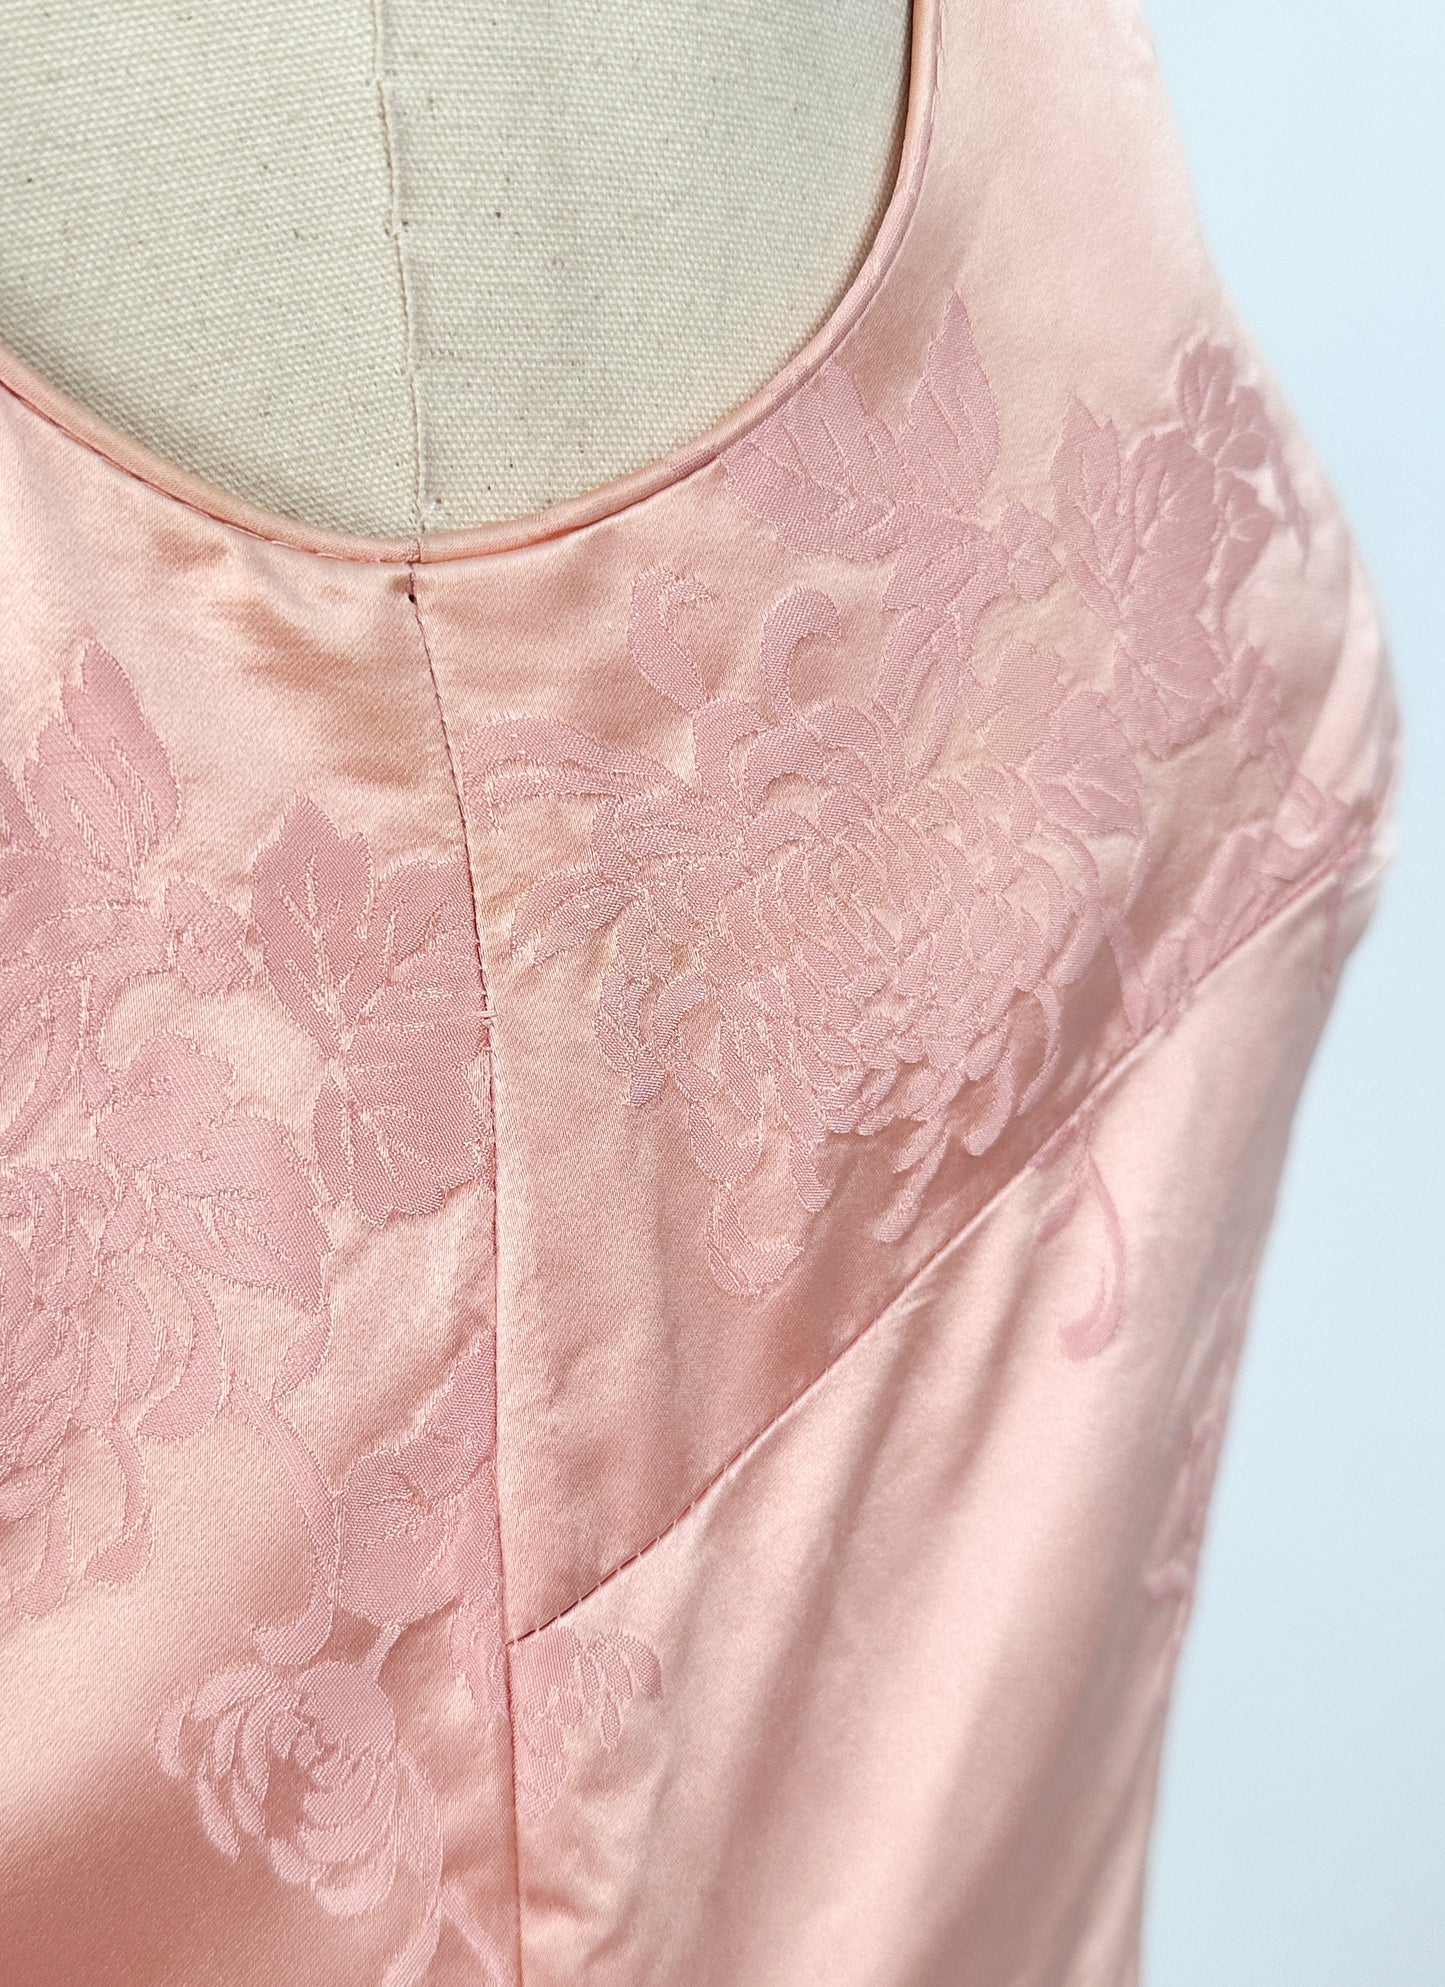 1950-60s Peony Pink Silk Wiggle Dress with Embossed Chrysanthemums / Waist 28